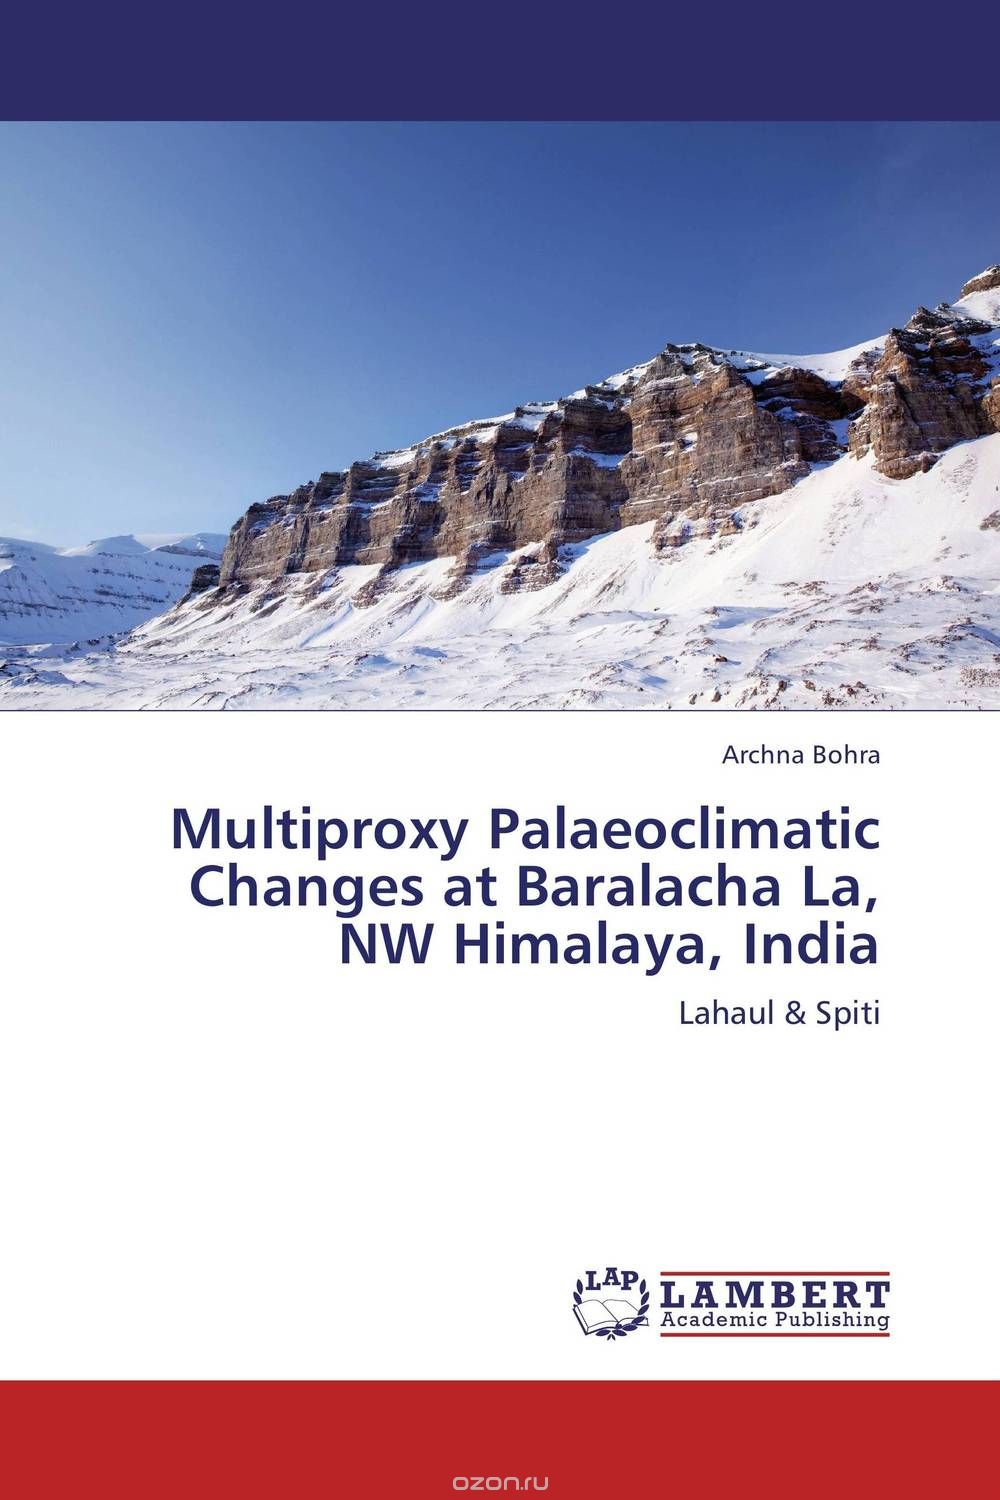 Multiproxy Palaeoclimatic Changes at Baralacha La, NW Himalaya, India